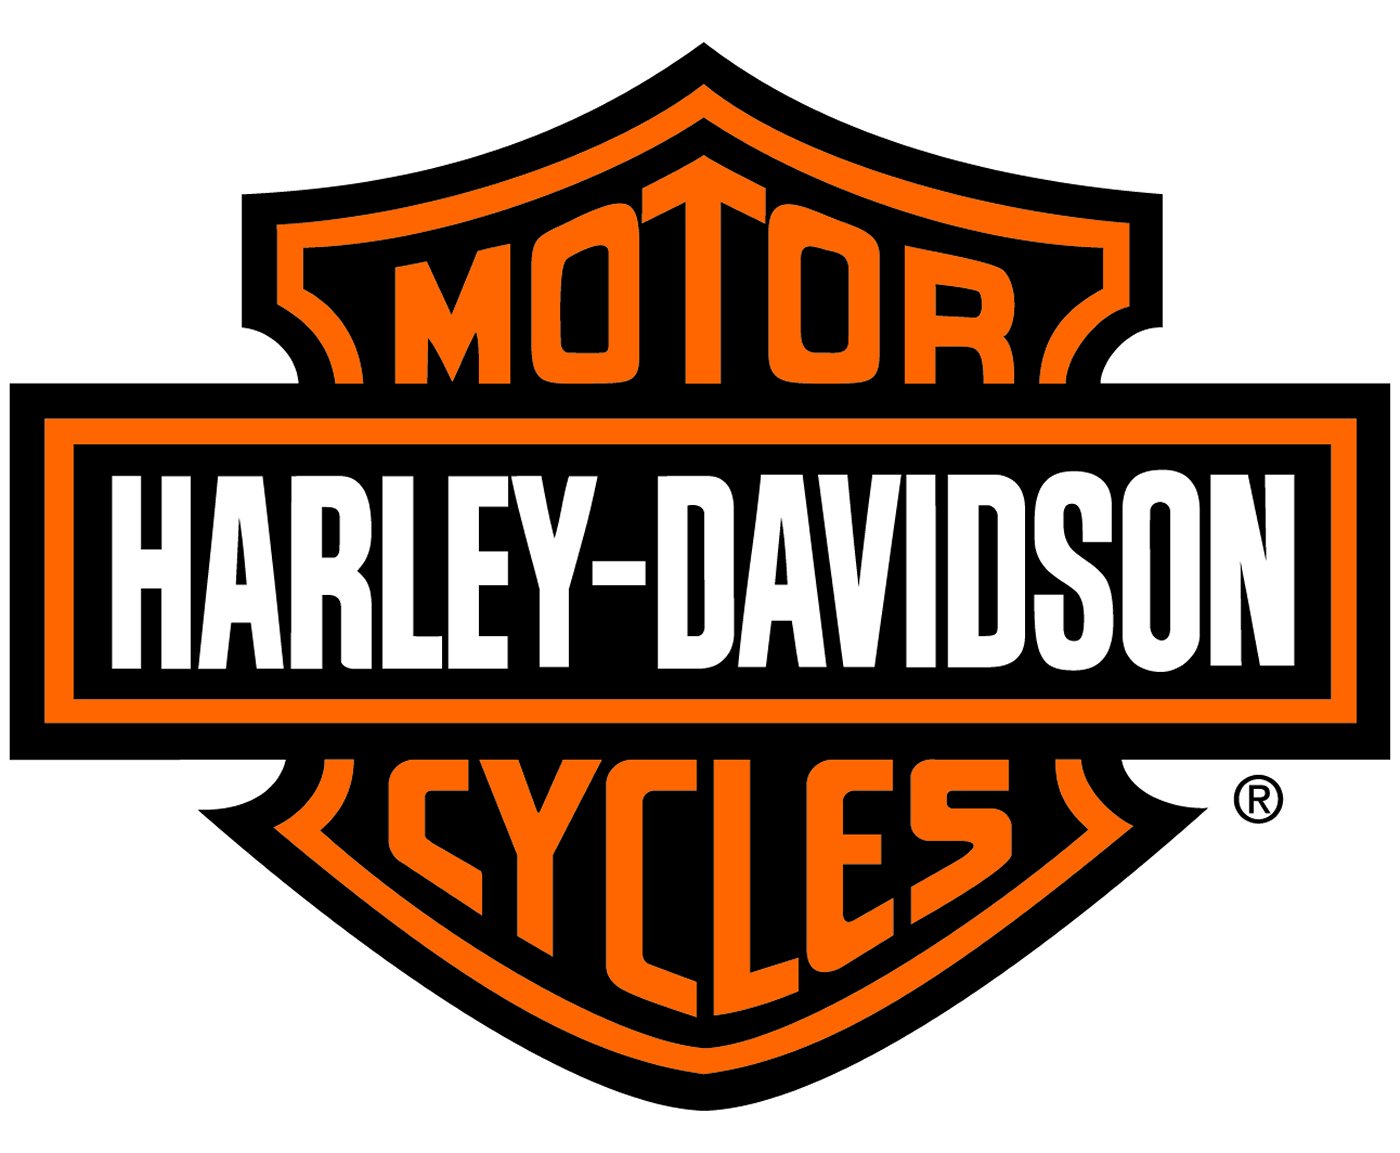 Harley Davidson - logo